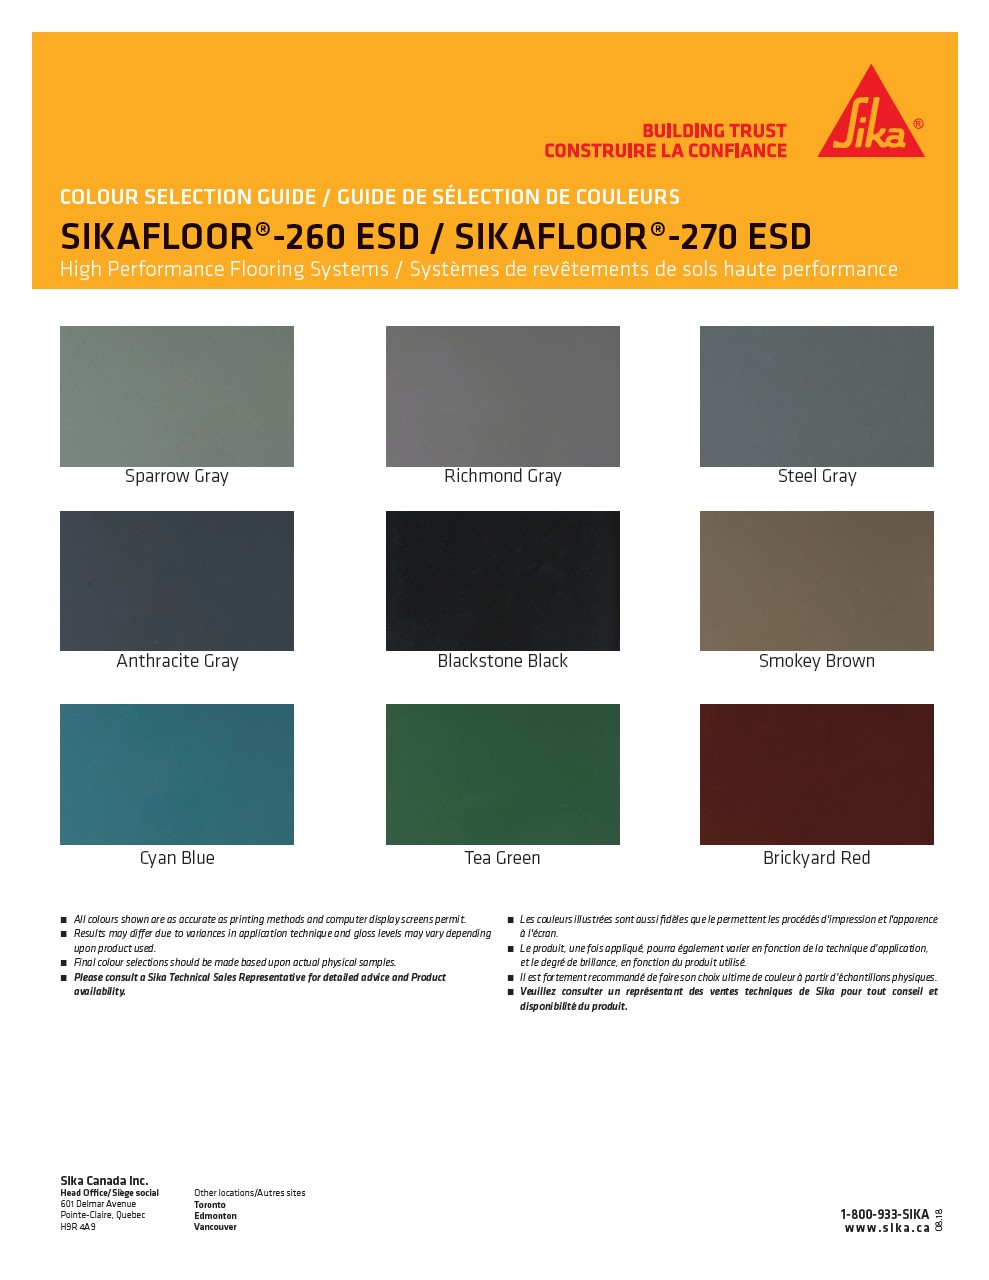 Colour Guide - Sikafloor ESD